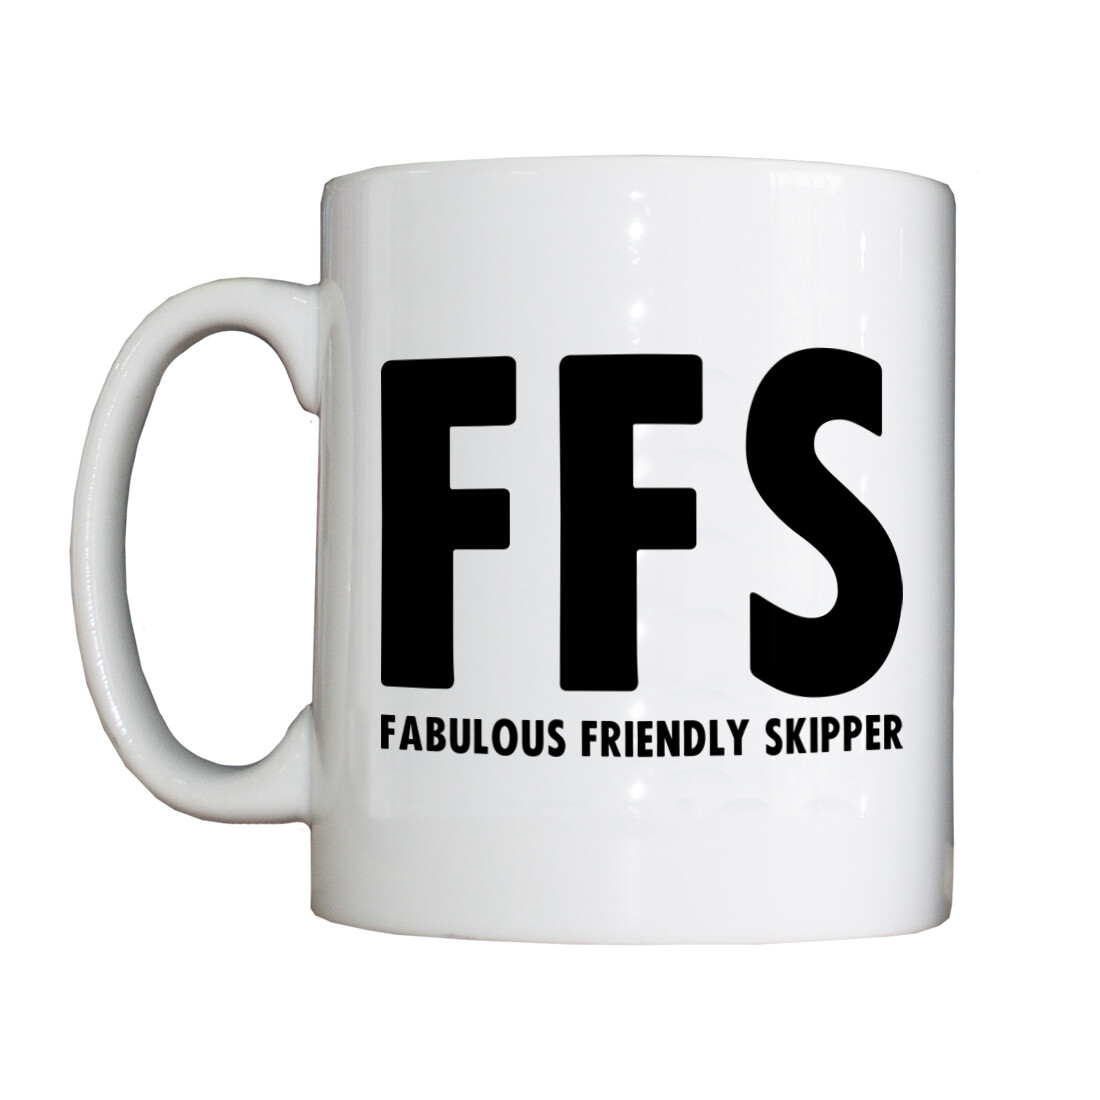 Personalised 'FFS' Drinking Vessel